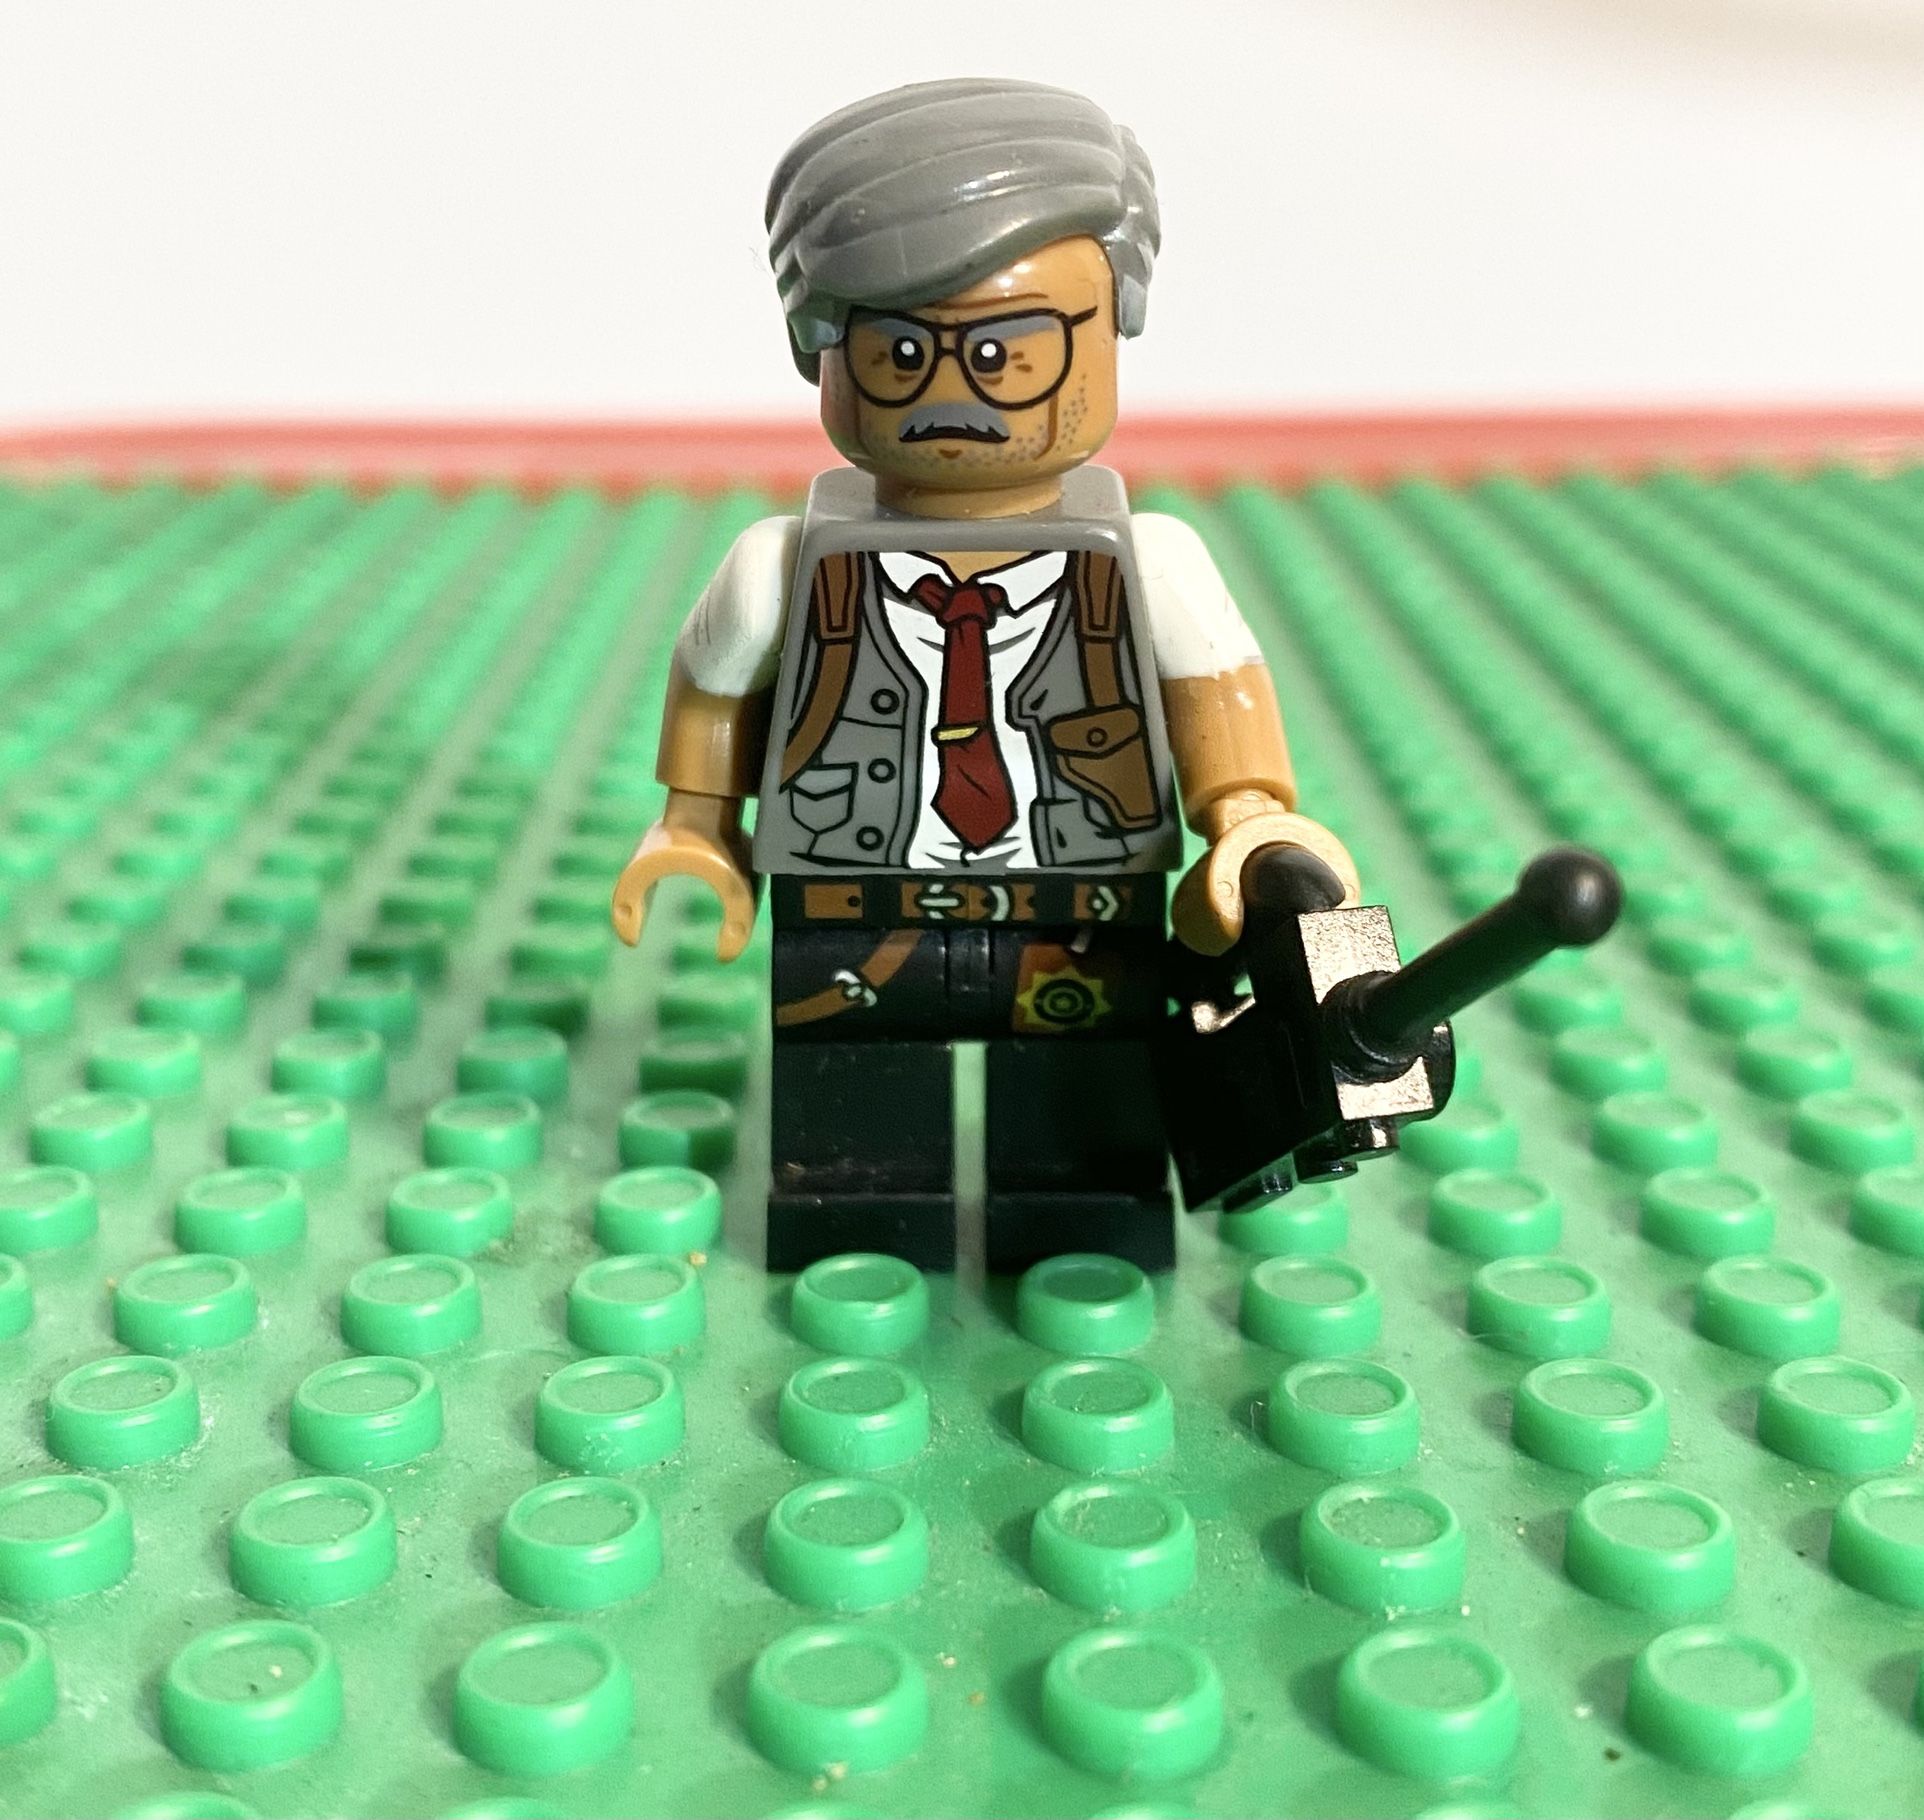 Lego Mini Figure Commissioner Gordon-The Lego Batman Movie